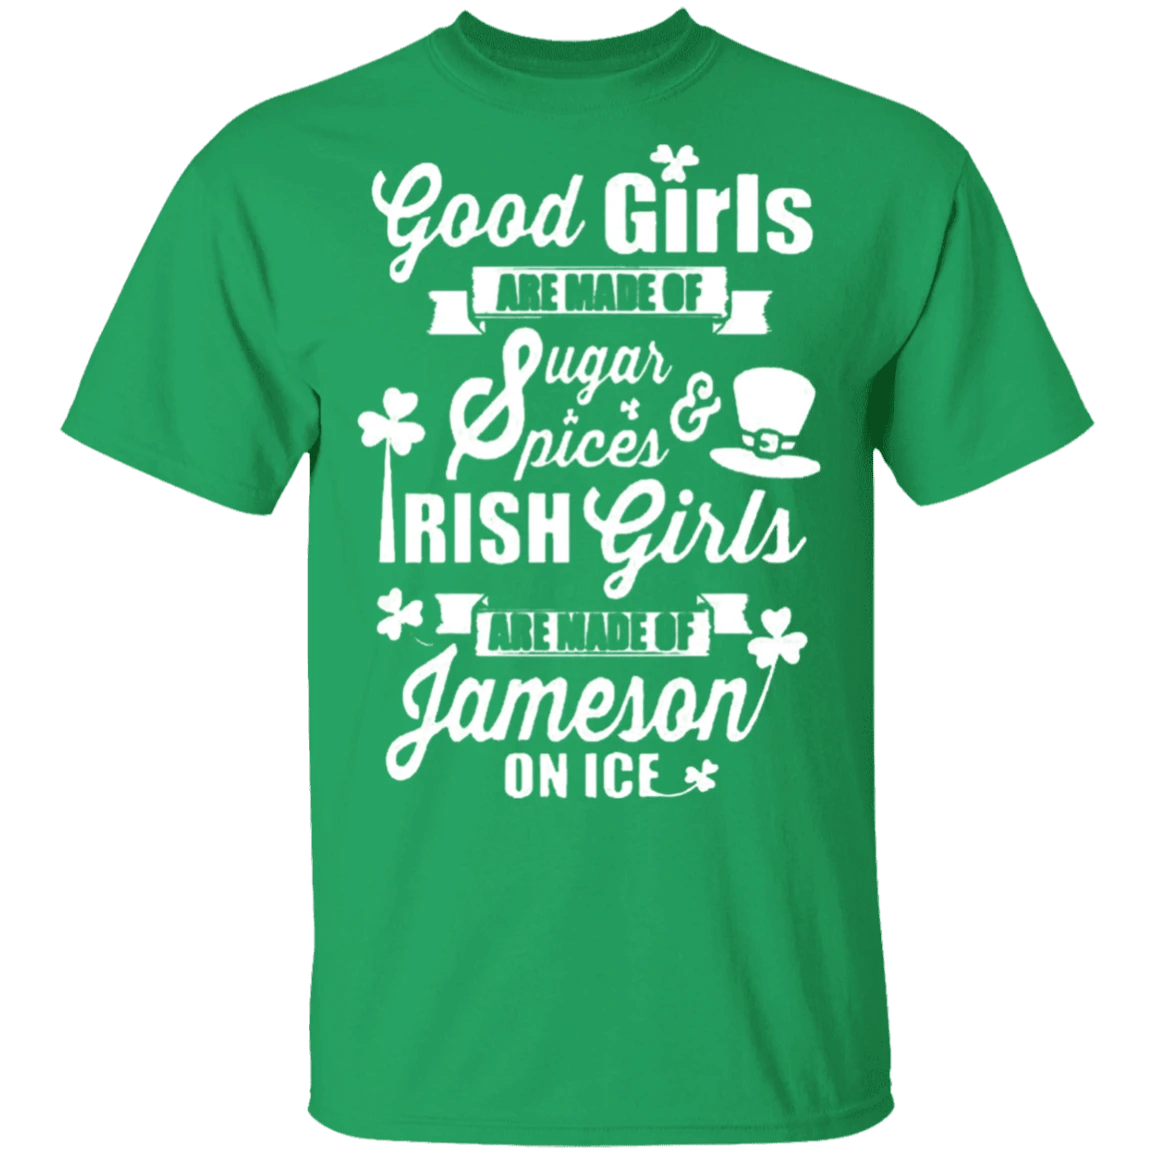 Woman's Shirt St Patrick's Day Irish Girls Women's Shirts For St Patrick's Day Clothing